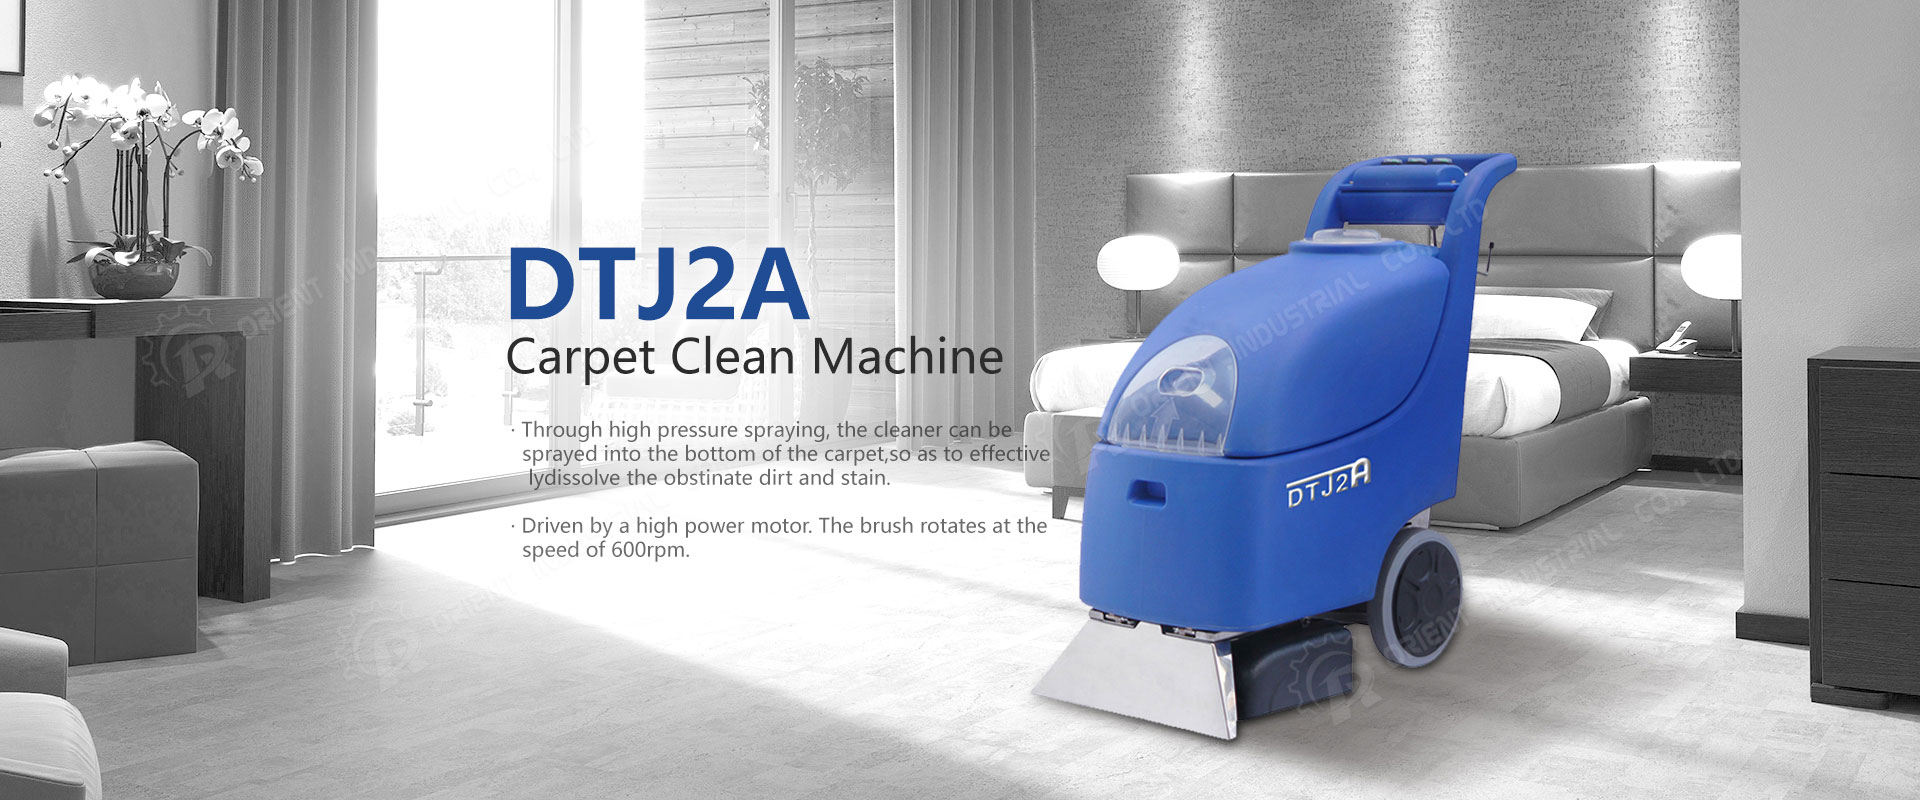 Carpet Cleaning Machine DTJ2A